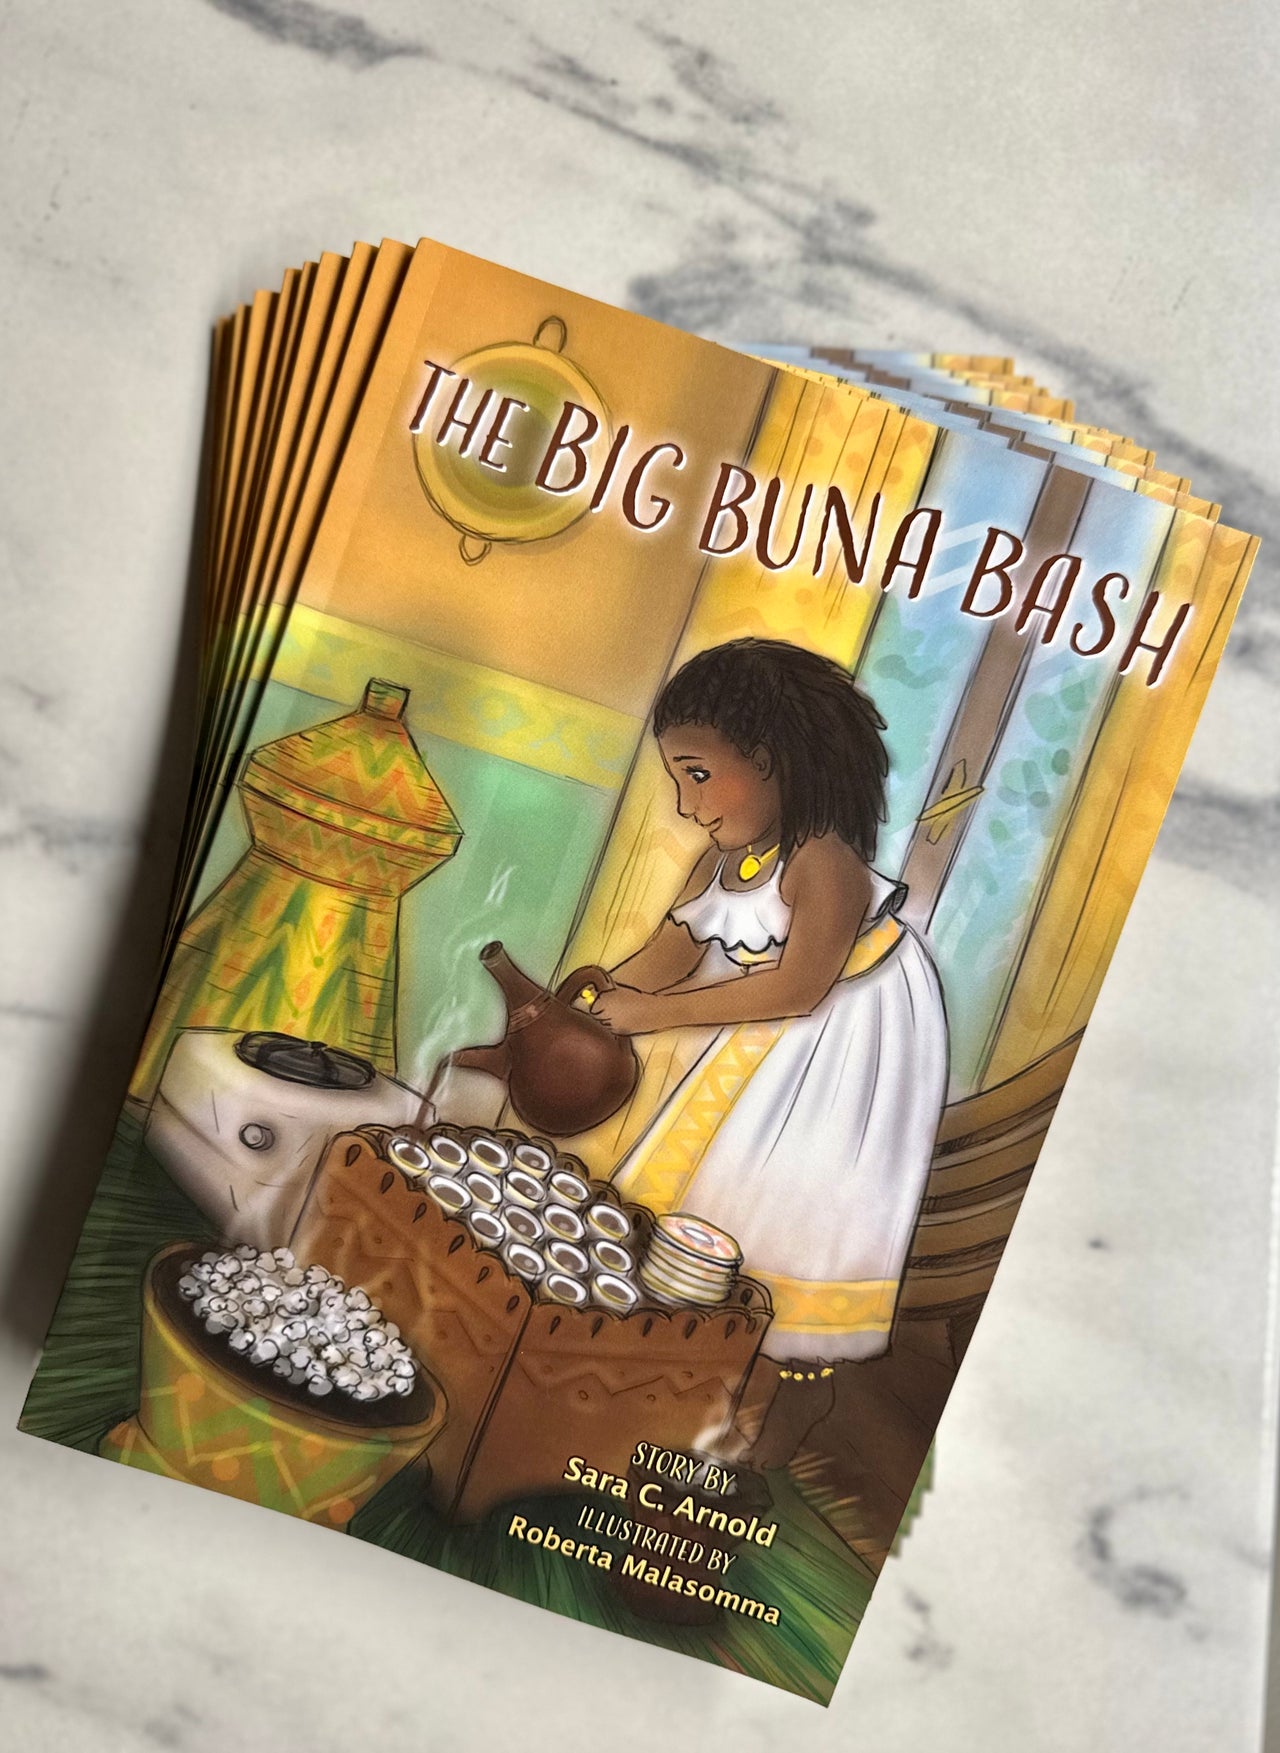 The Big Buna Bash By Sara C. Arnold (Kids Book) - Shady Lion Coffee Co.